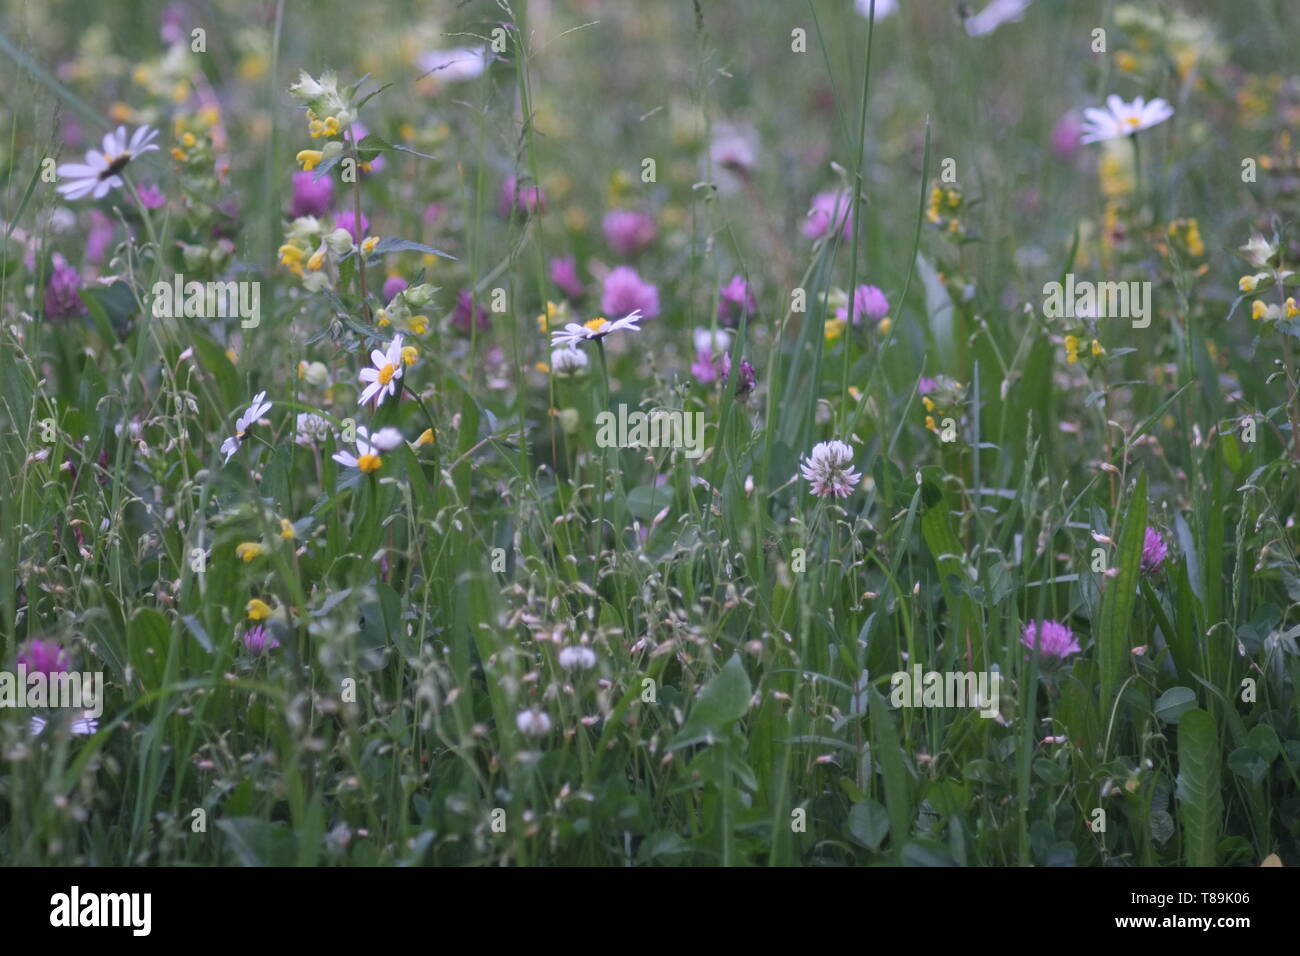 Wildblumen in privaten gaden Hilfe gegen Artensterben Stockfoto